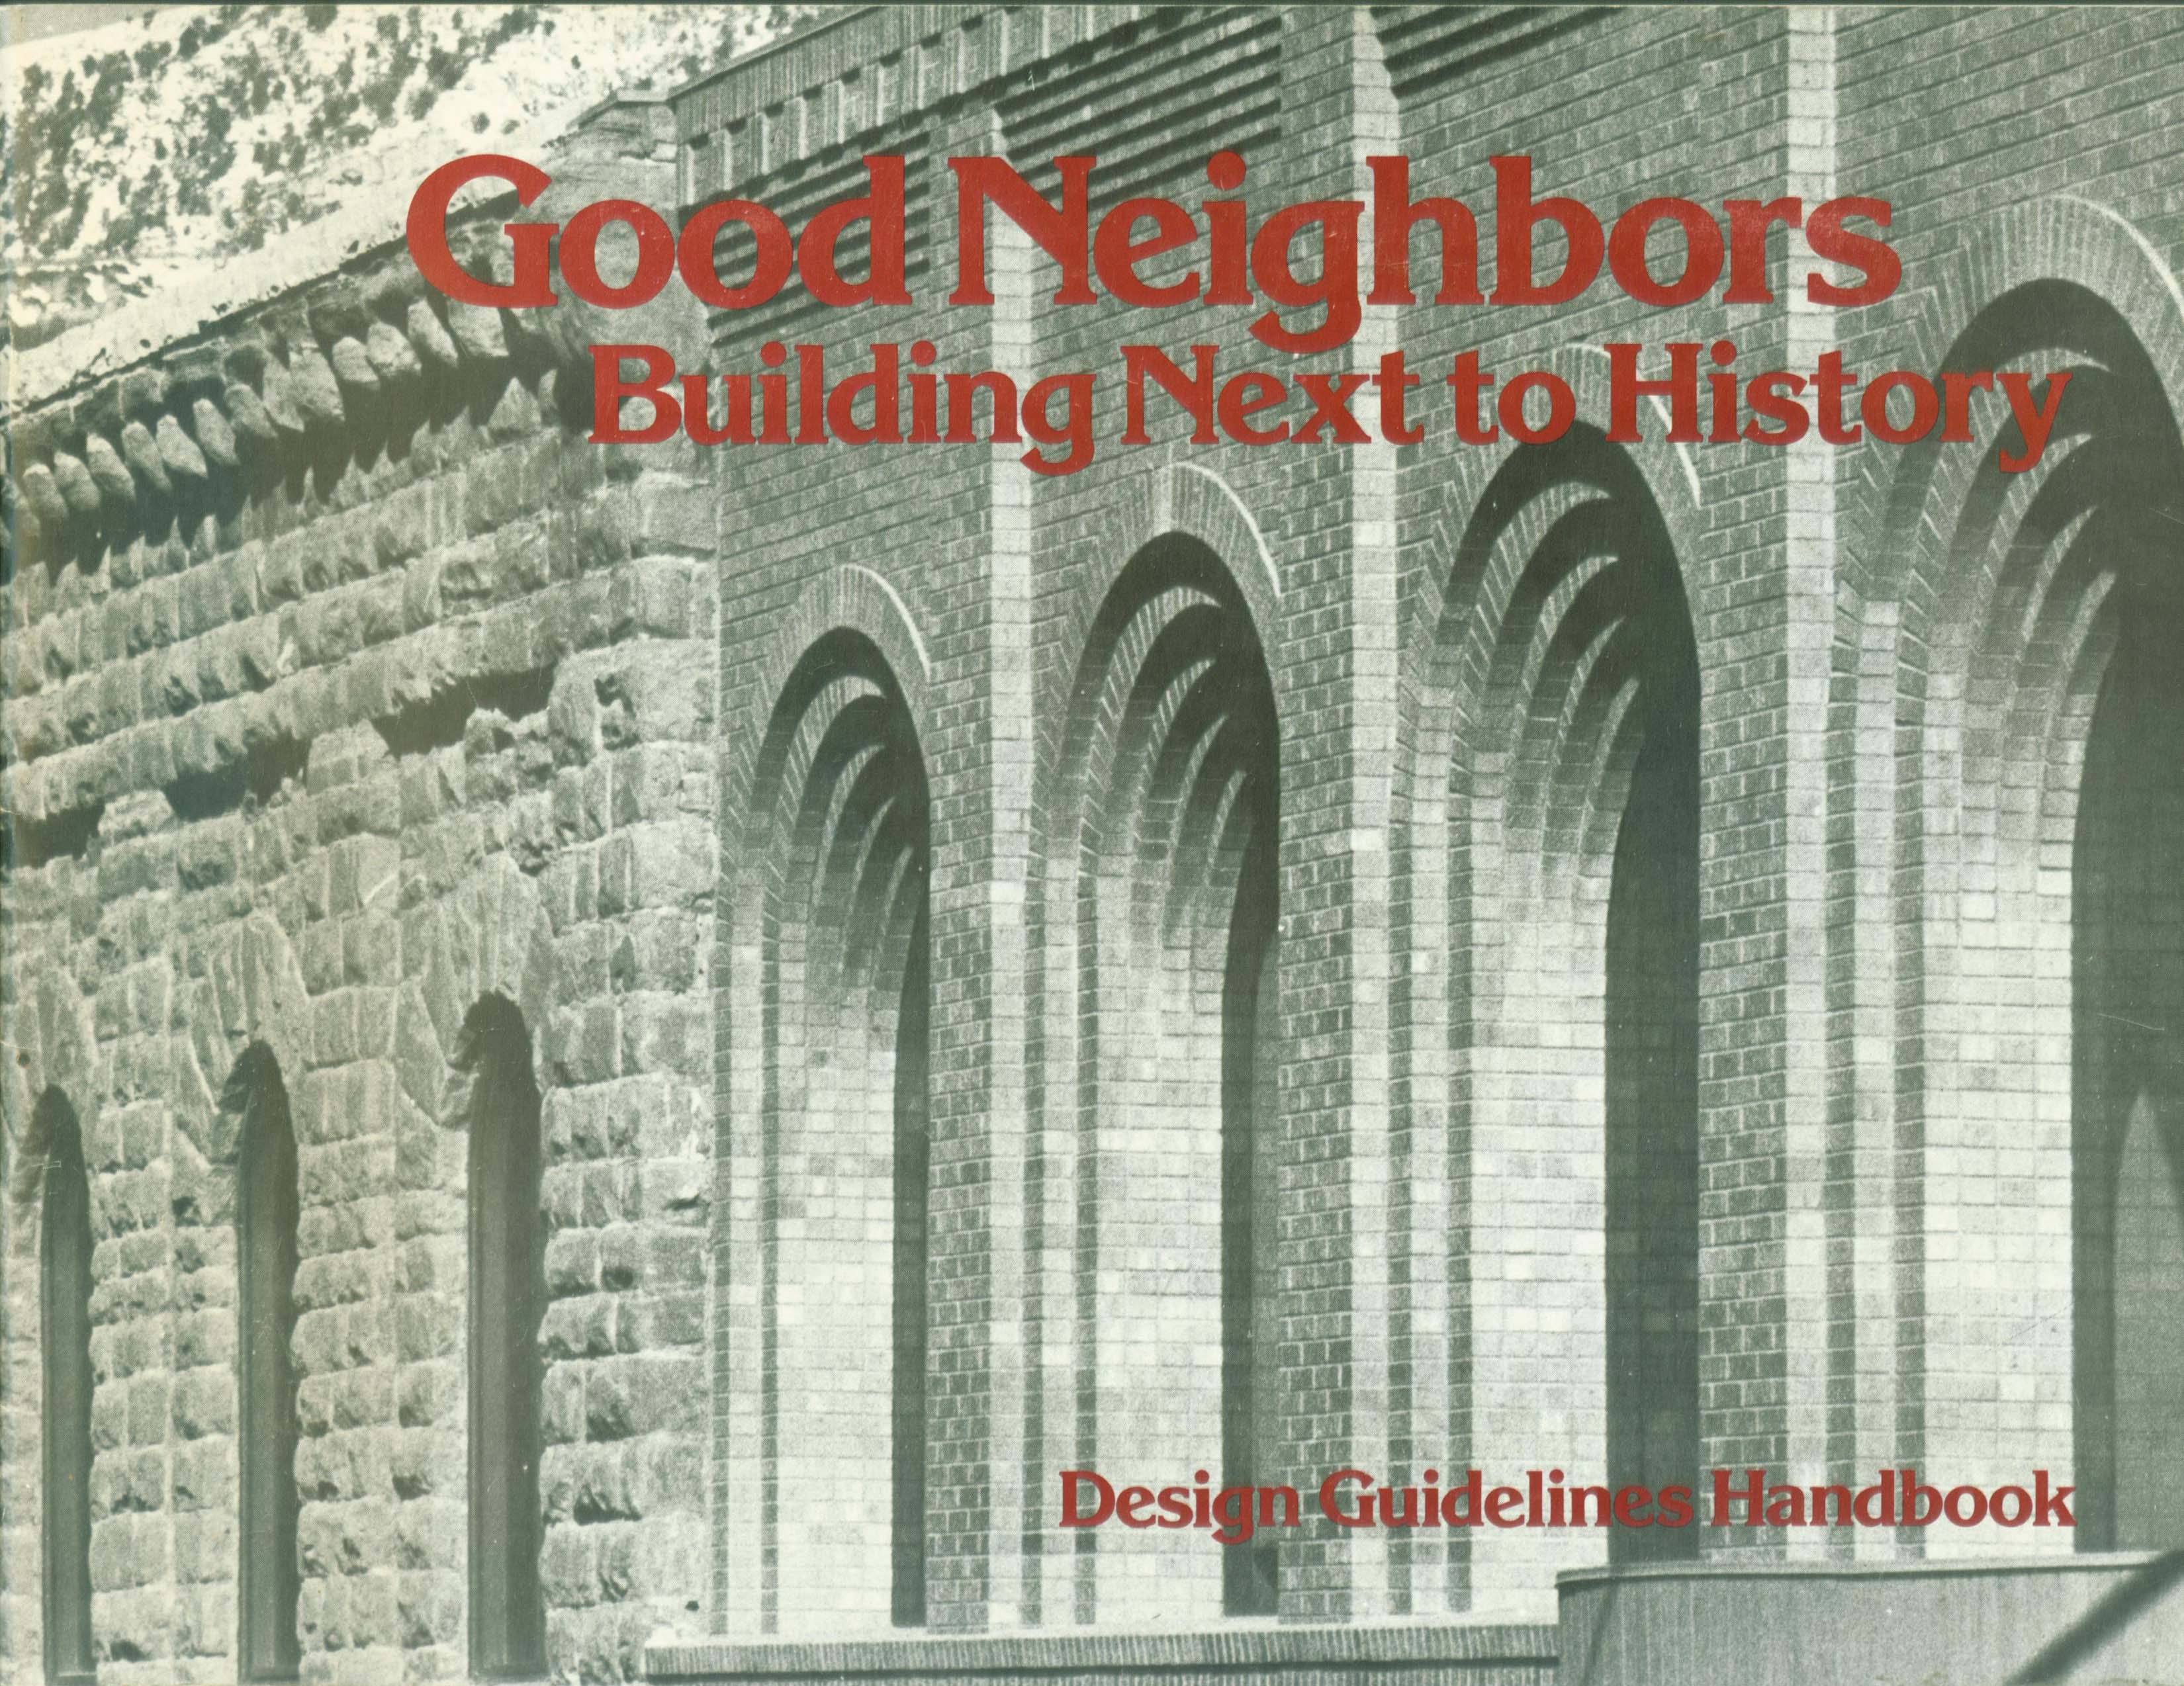 GOOD NEIGHBORS: building next to history--design guidelines handbook.